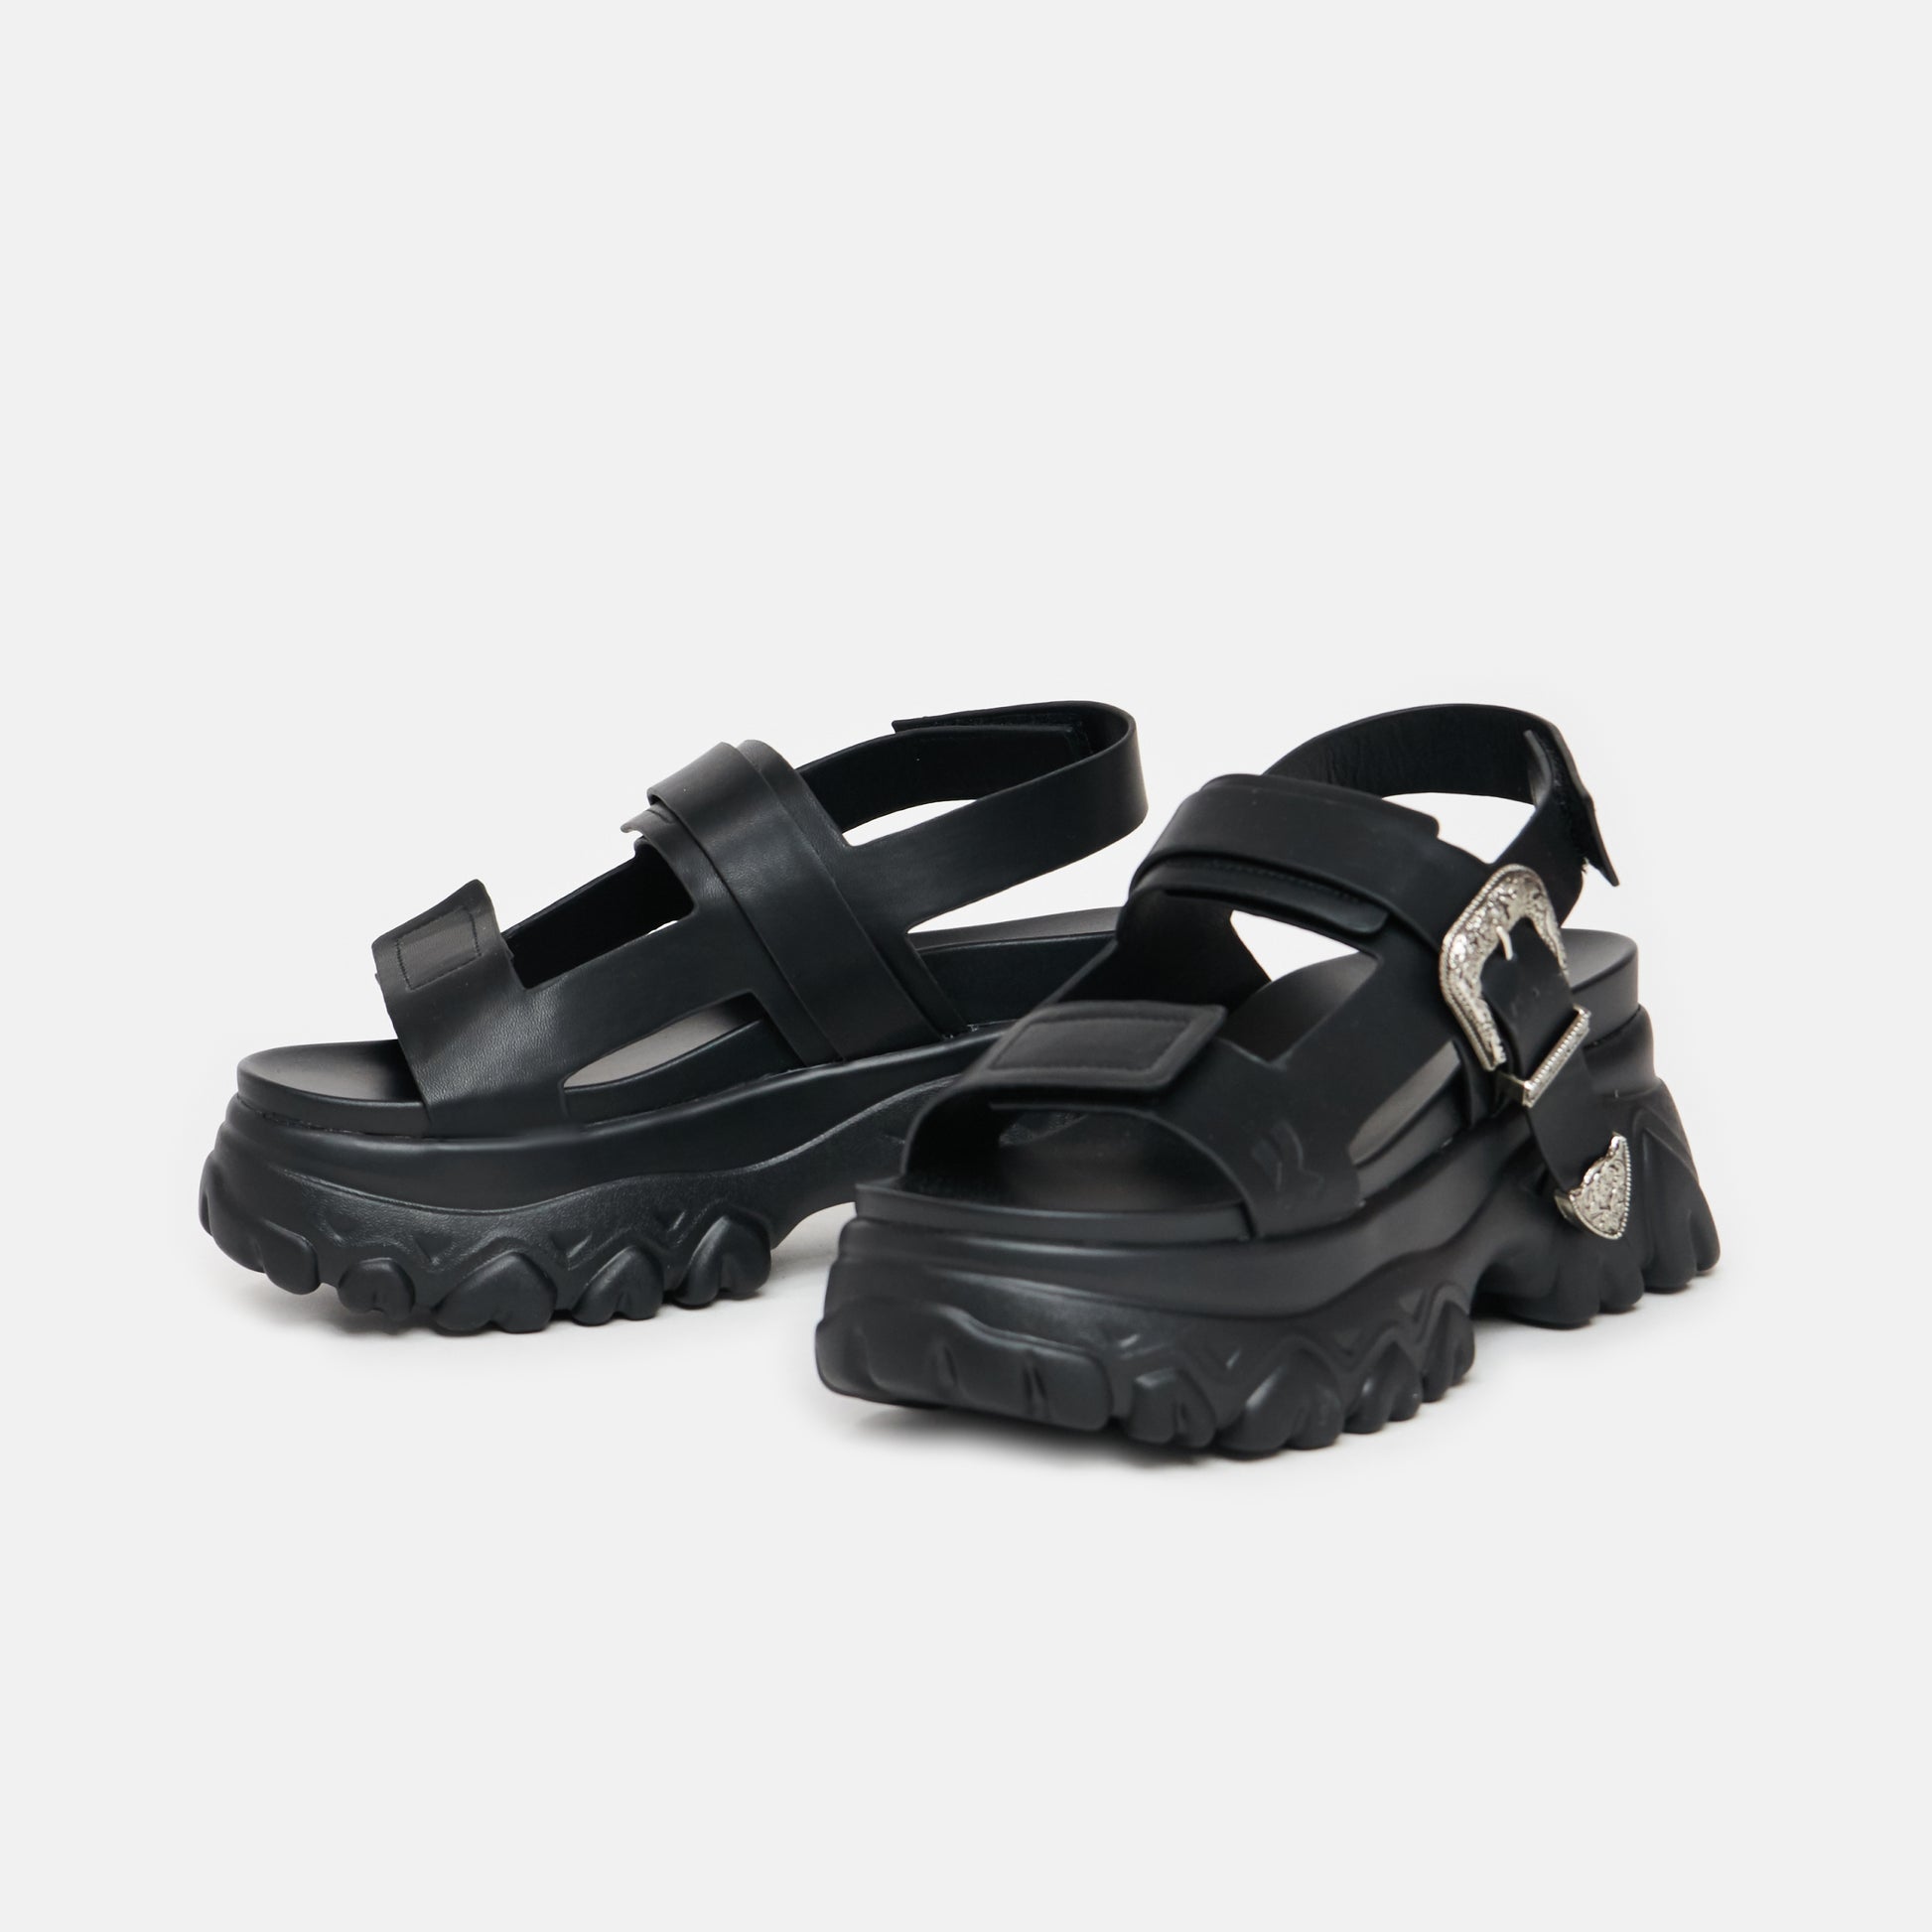 Iron Surveillance Chunky Sandals - Sandals - KOI Footwear - Black - Three-Quarter View